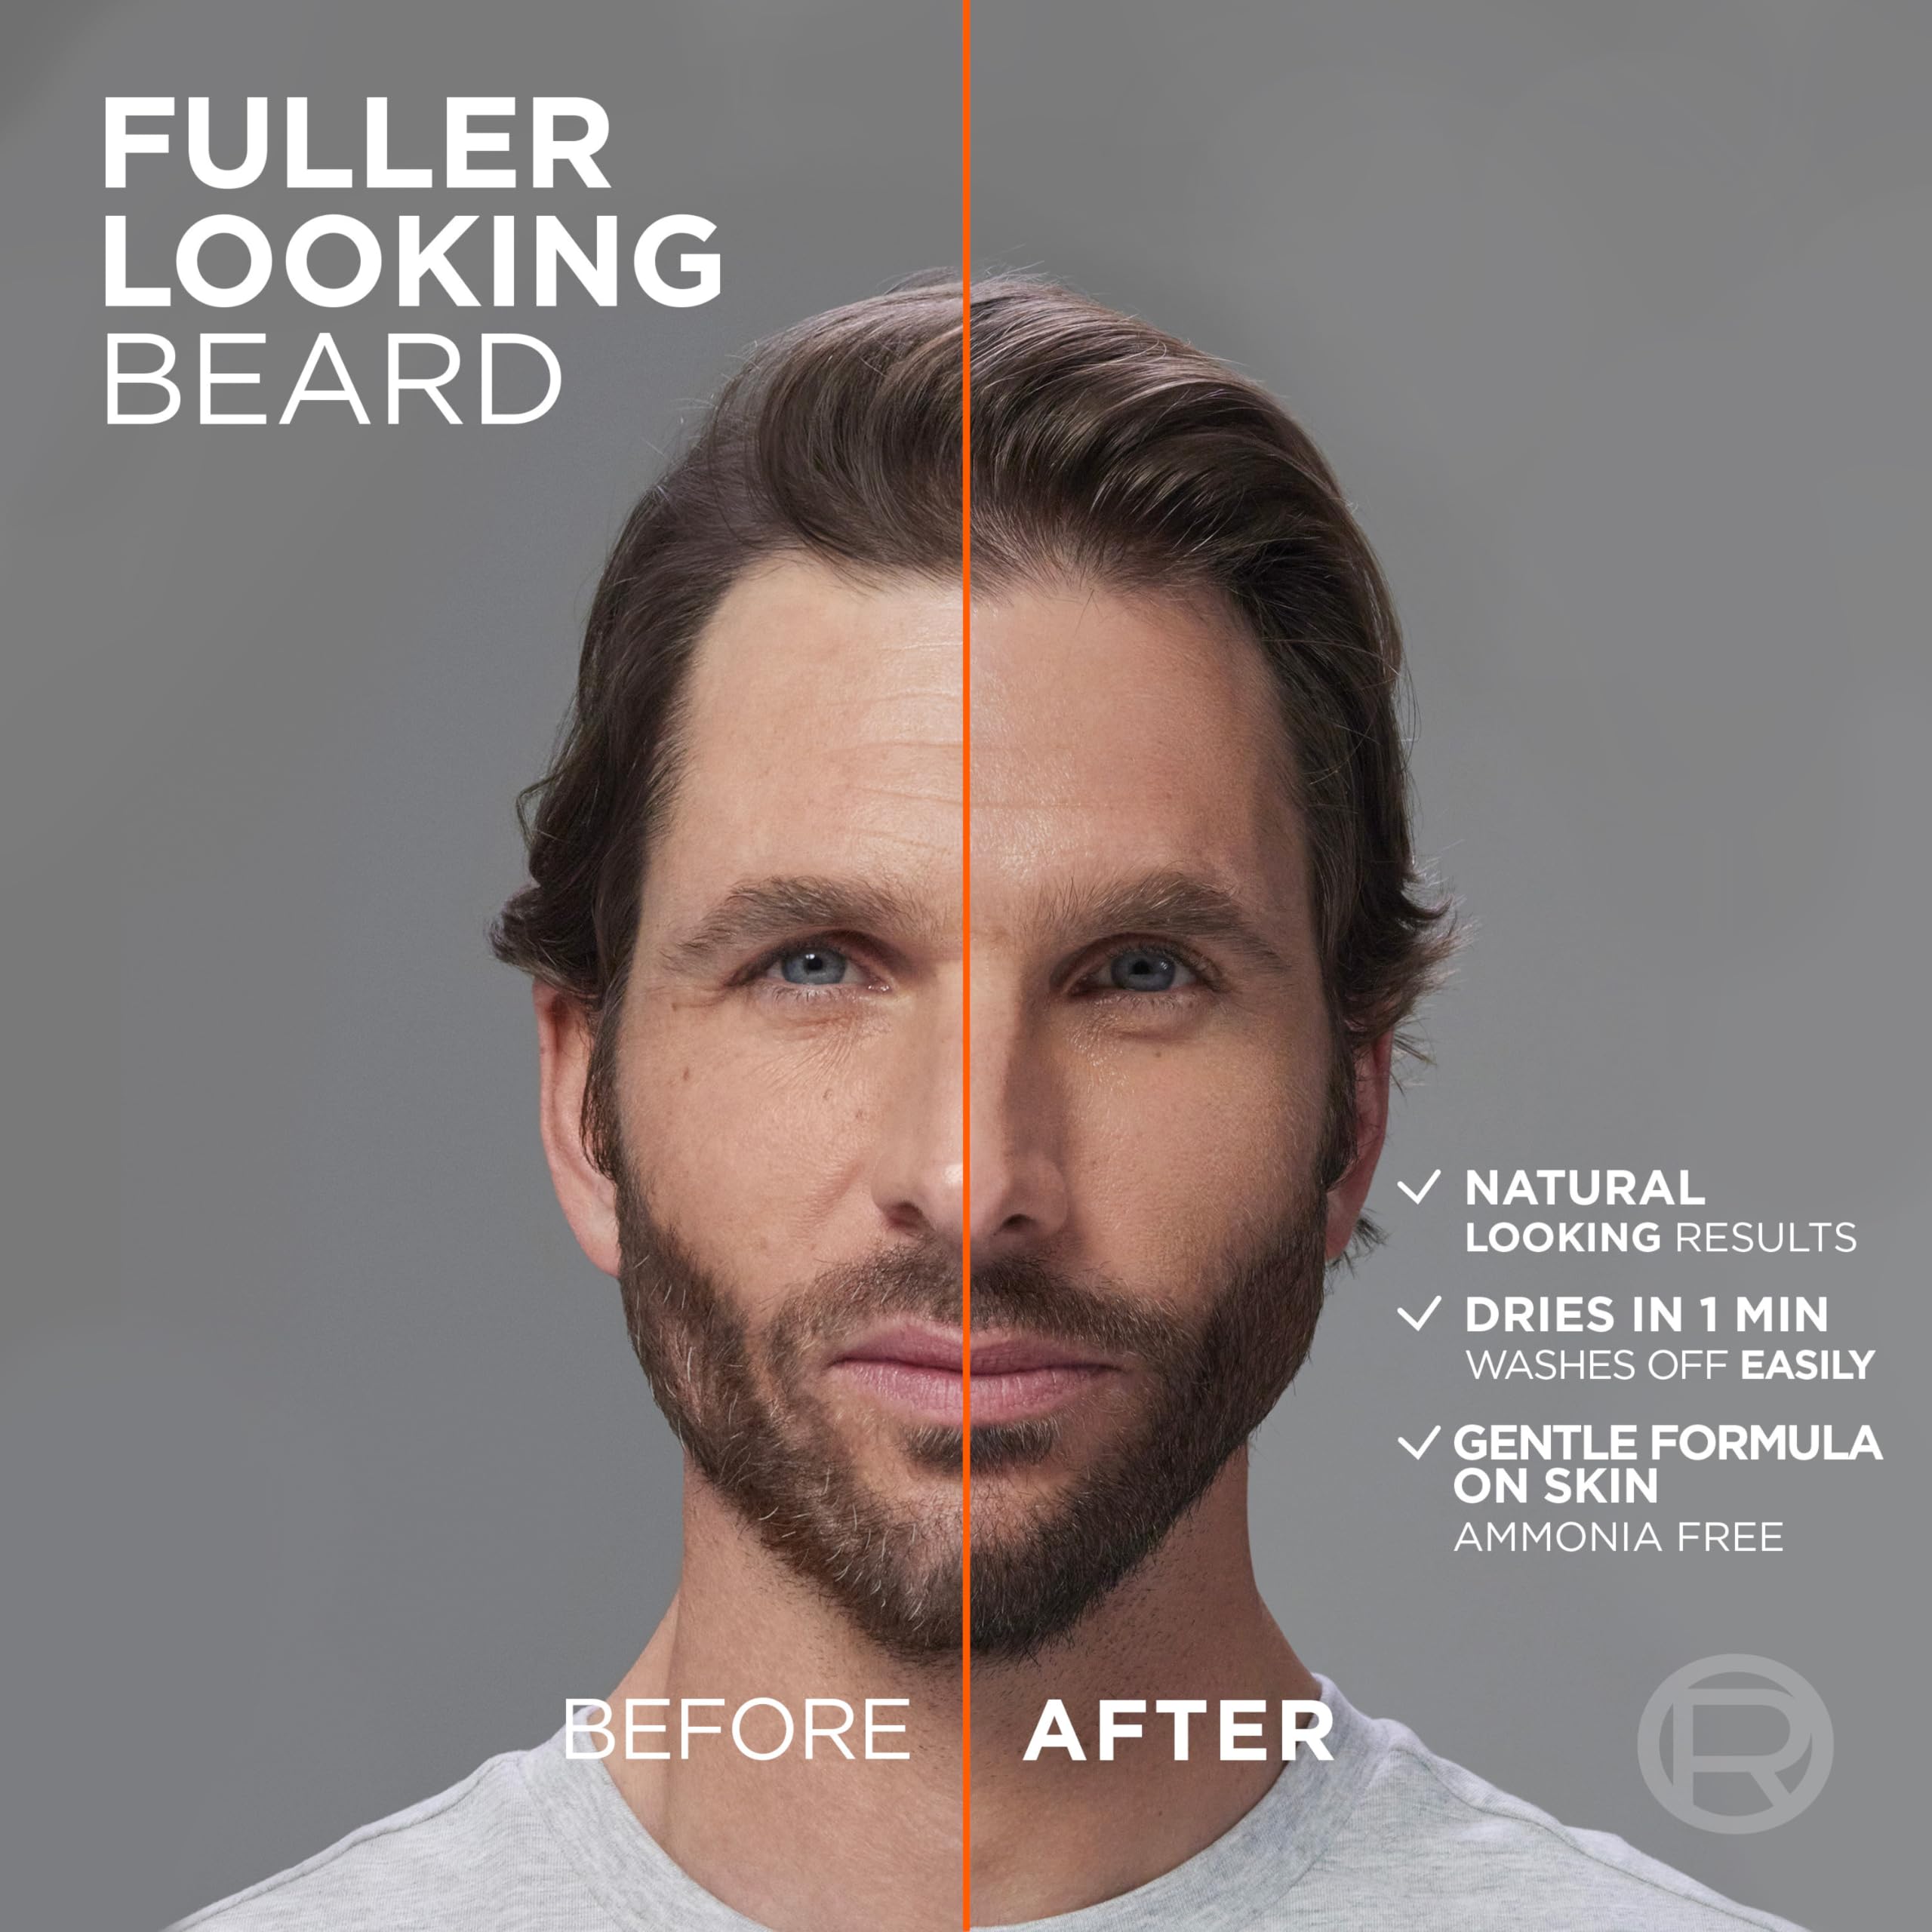 L'Oreal Paris Men Expert Instant Temporary Beard Color, Beard Filler for a Natural and Fuller-Looking Beard, 05 Light Medium Brown, 0.05 Fl Oz